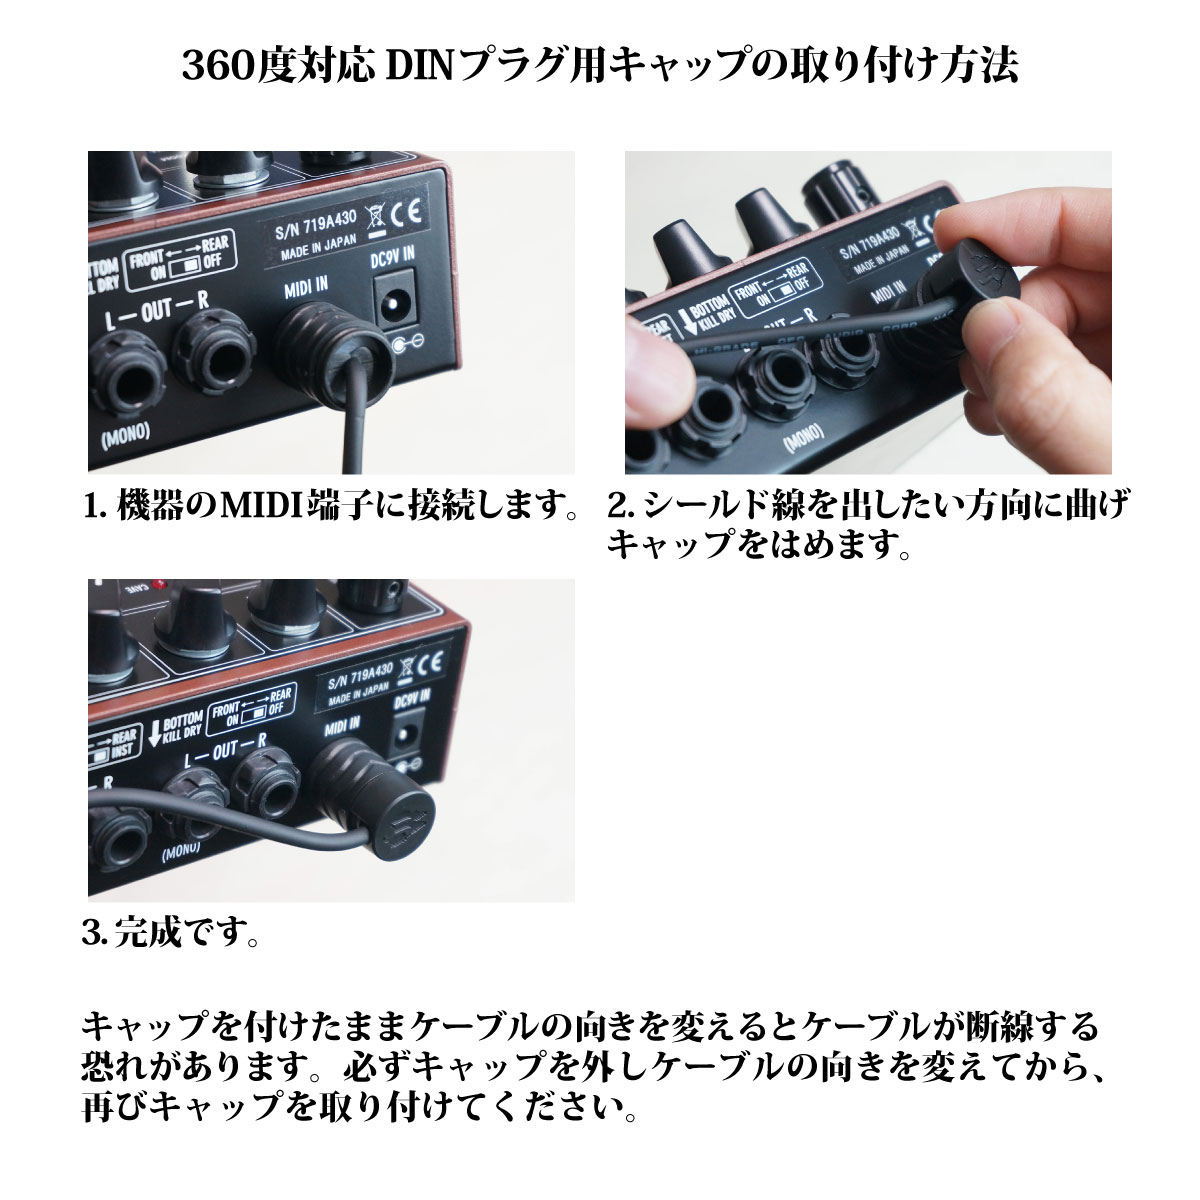 Free The Tone MIDI CABLE CM-3510-TRS 100cm MIDIケーブル 新品[フリーザトーン]  マルチトラックレコーダー